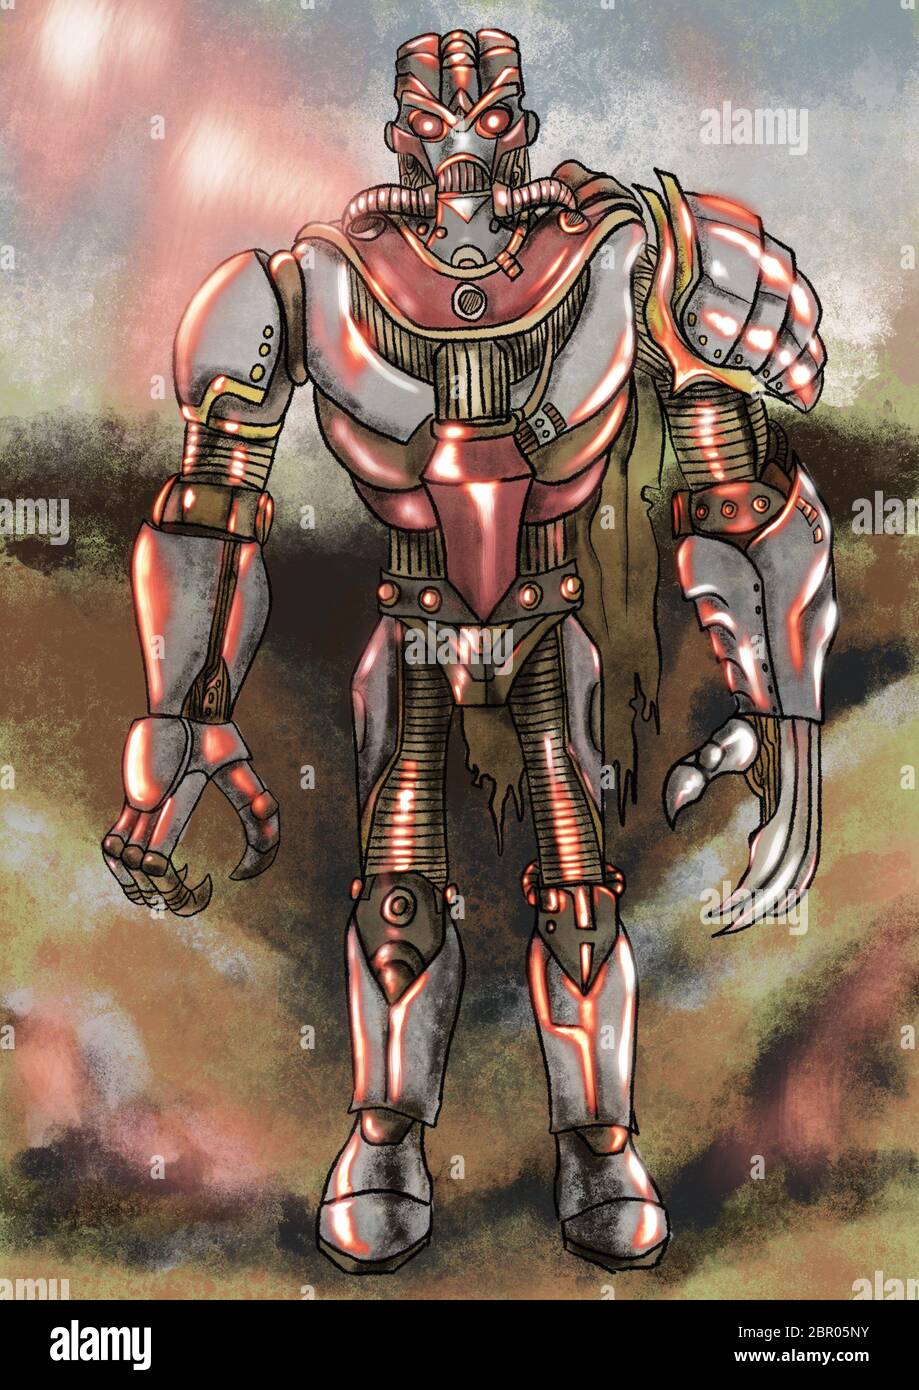 metal robot monster illustration Stock Photo - Alamy